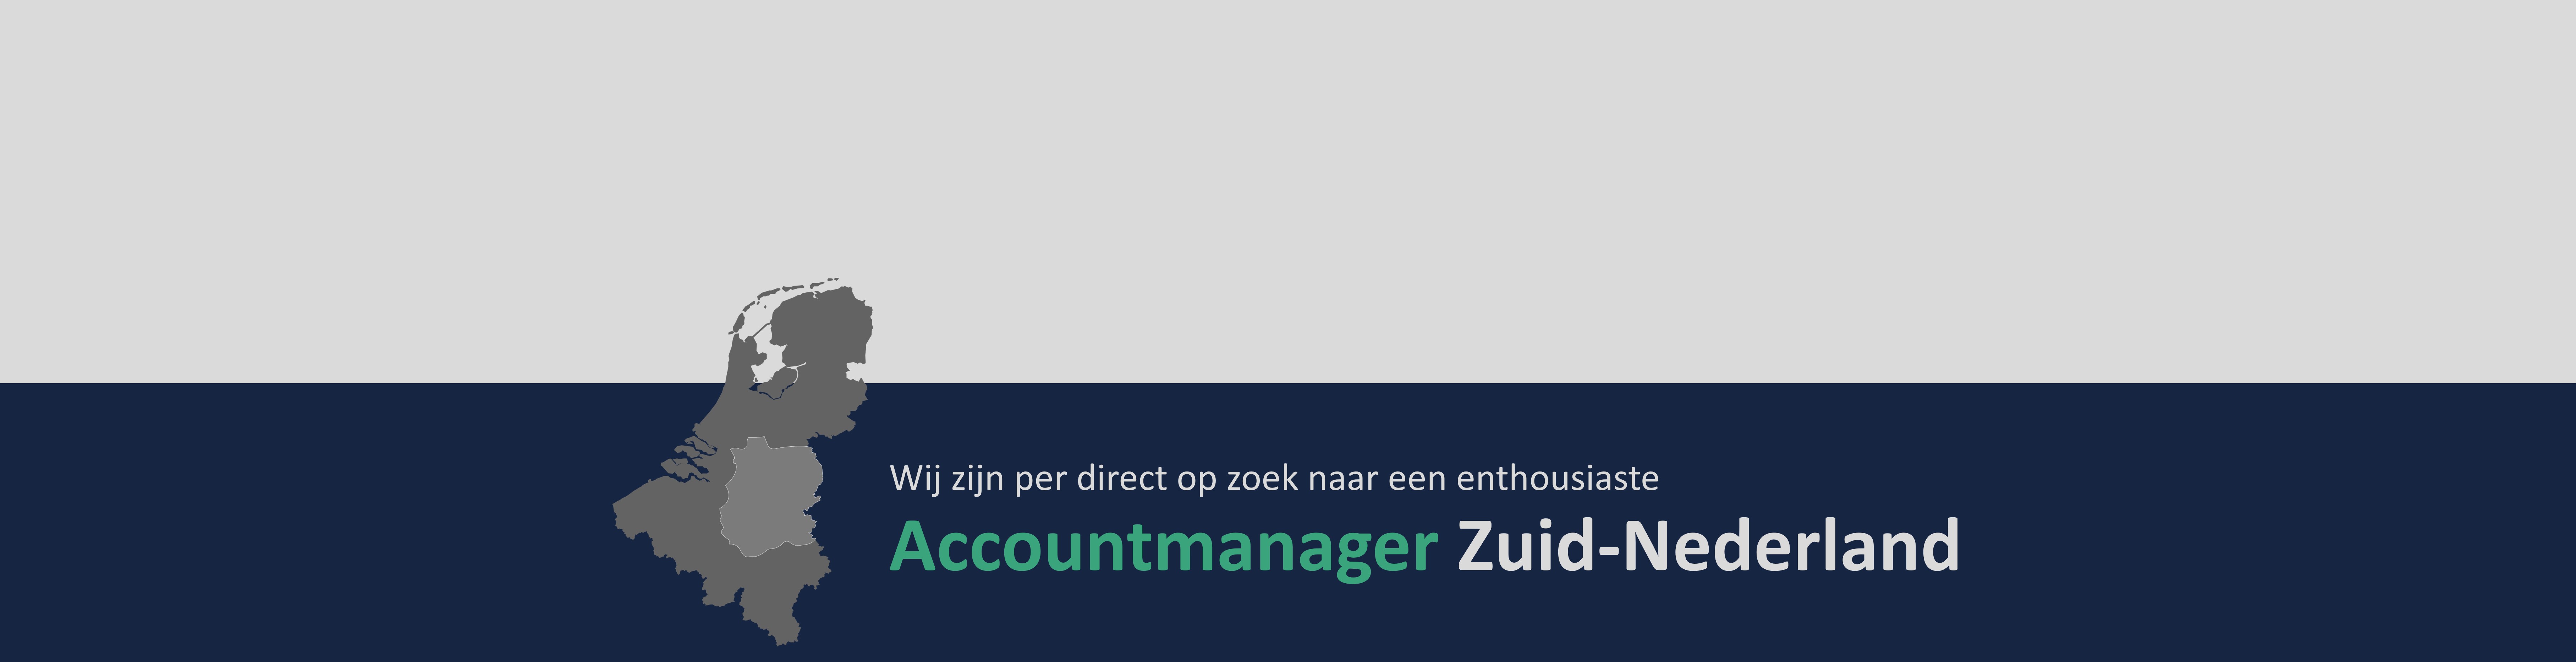 Heade Vacature accountmanager Zuid-Nederland